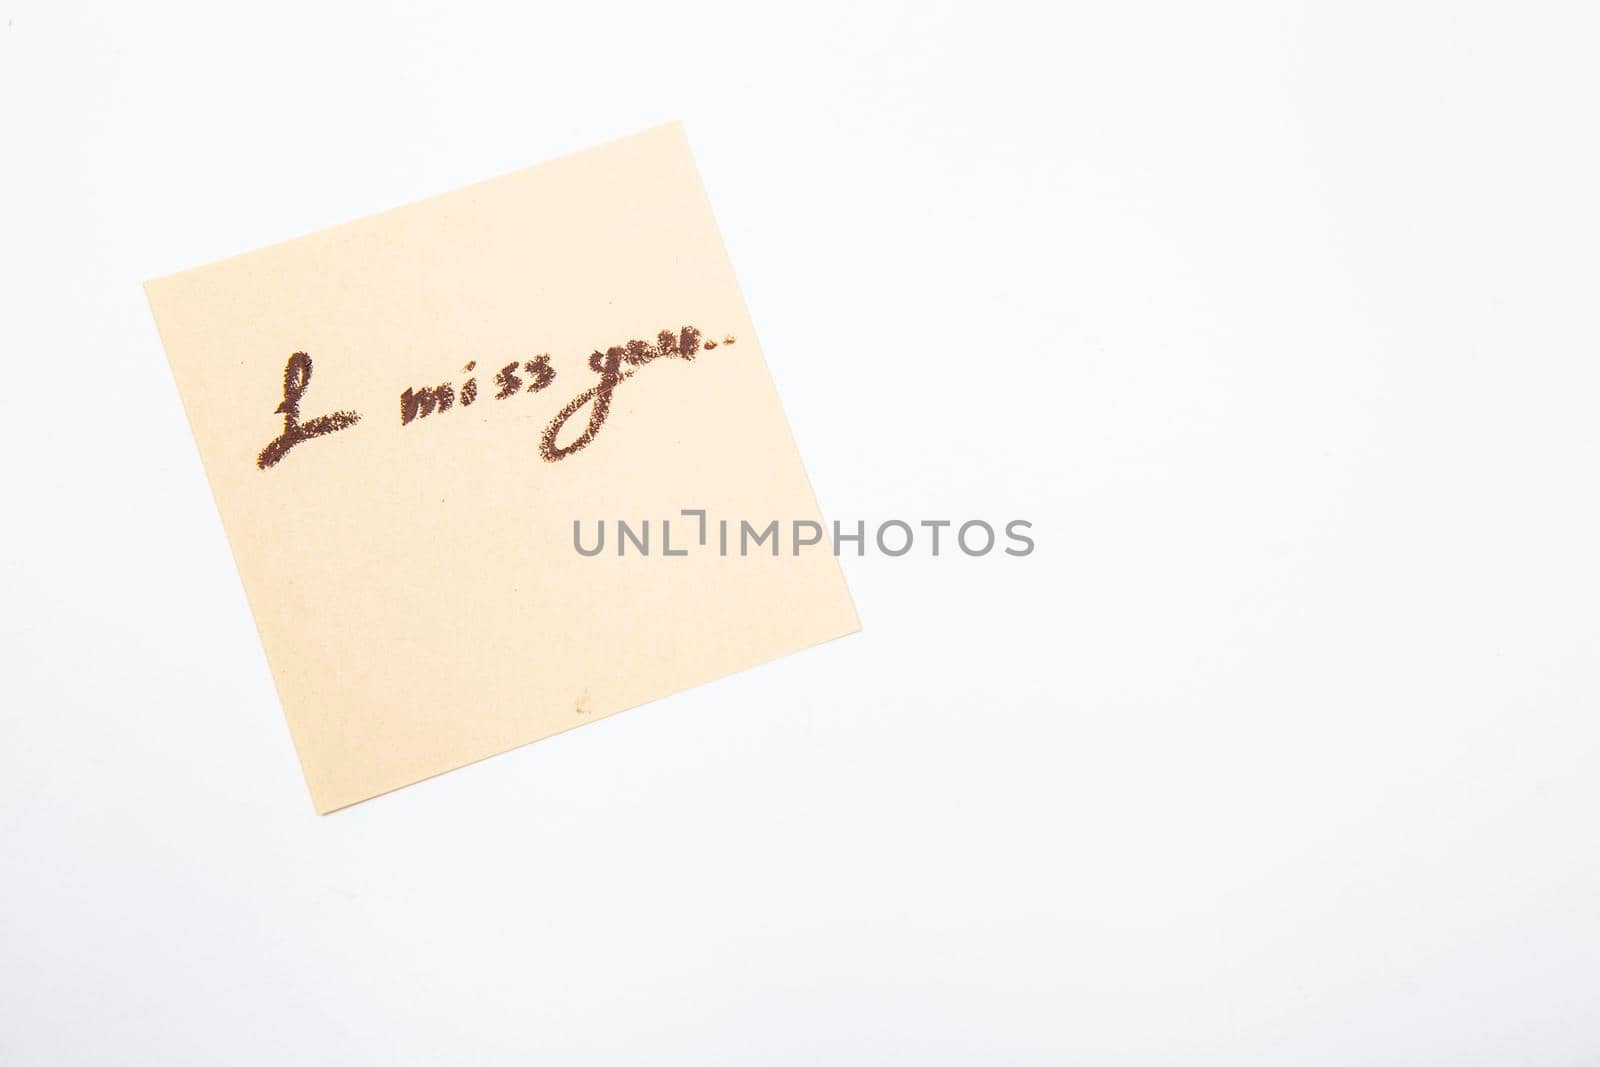 I miss you handwritten on yellow memo paper